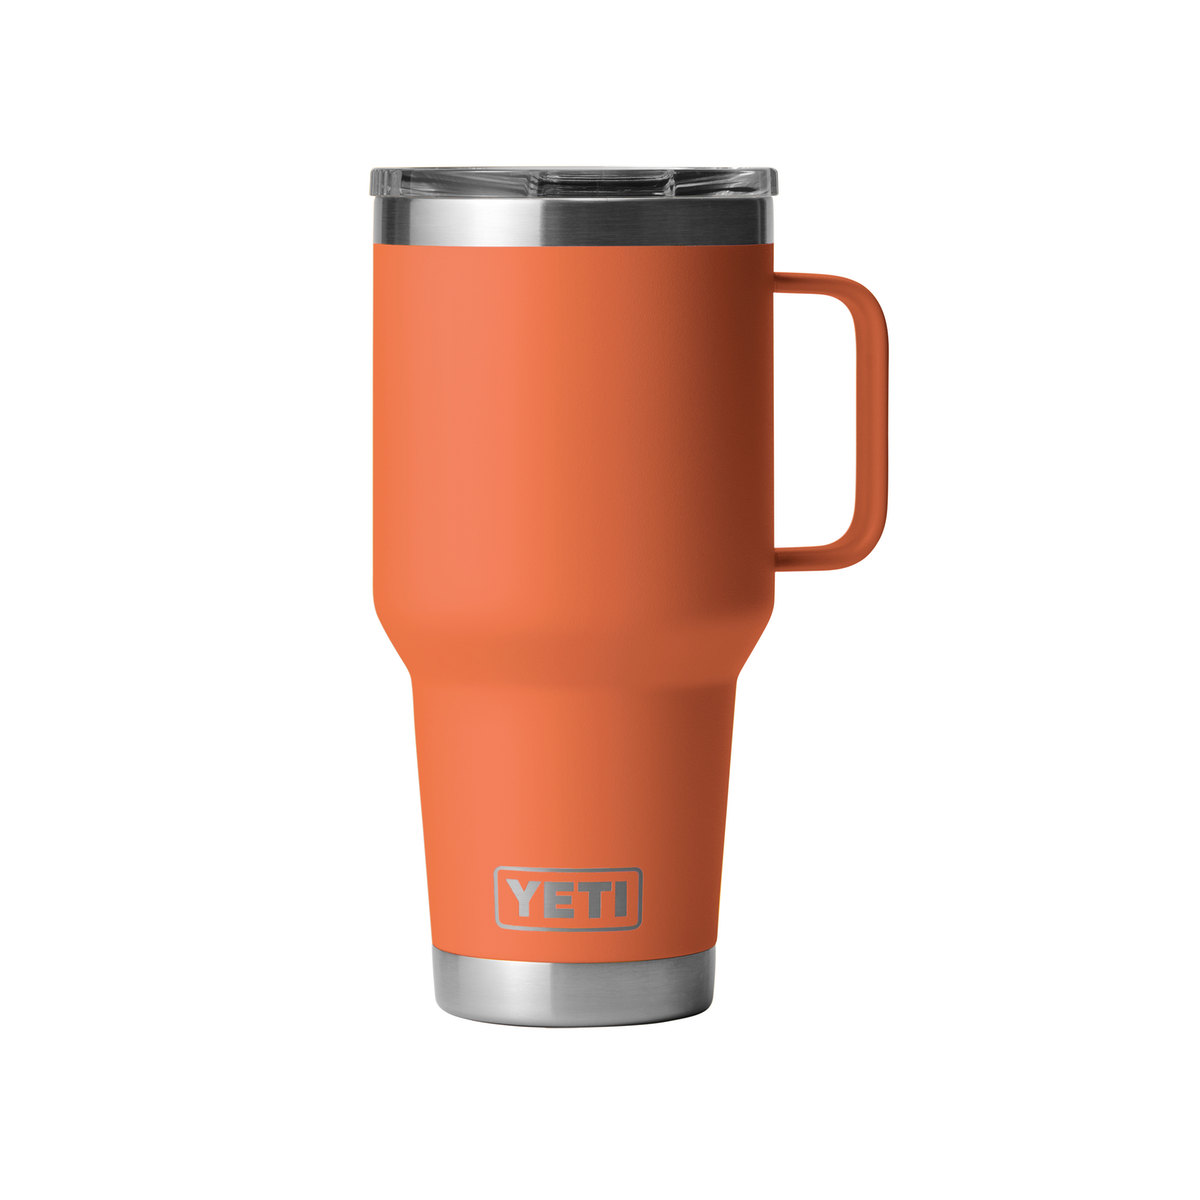 Yeti Rambler 30 Travel Mug